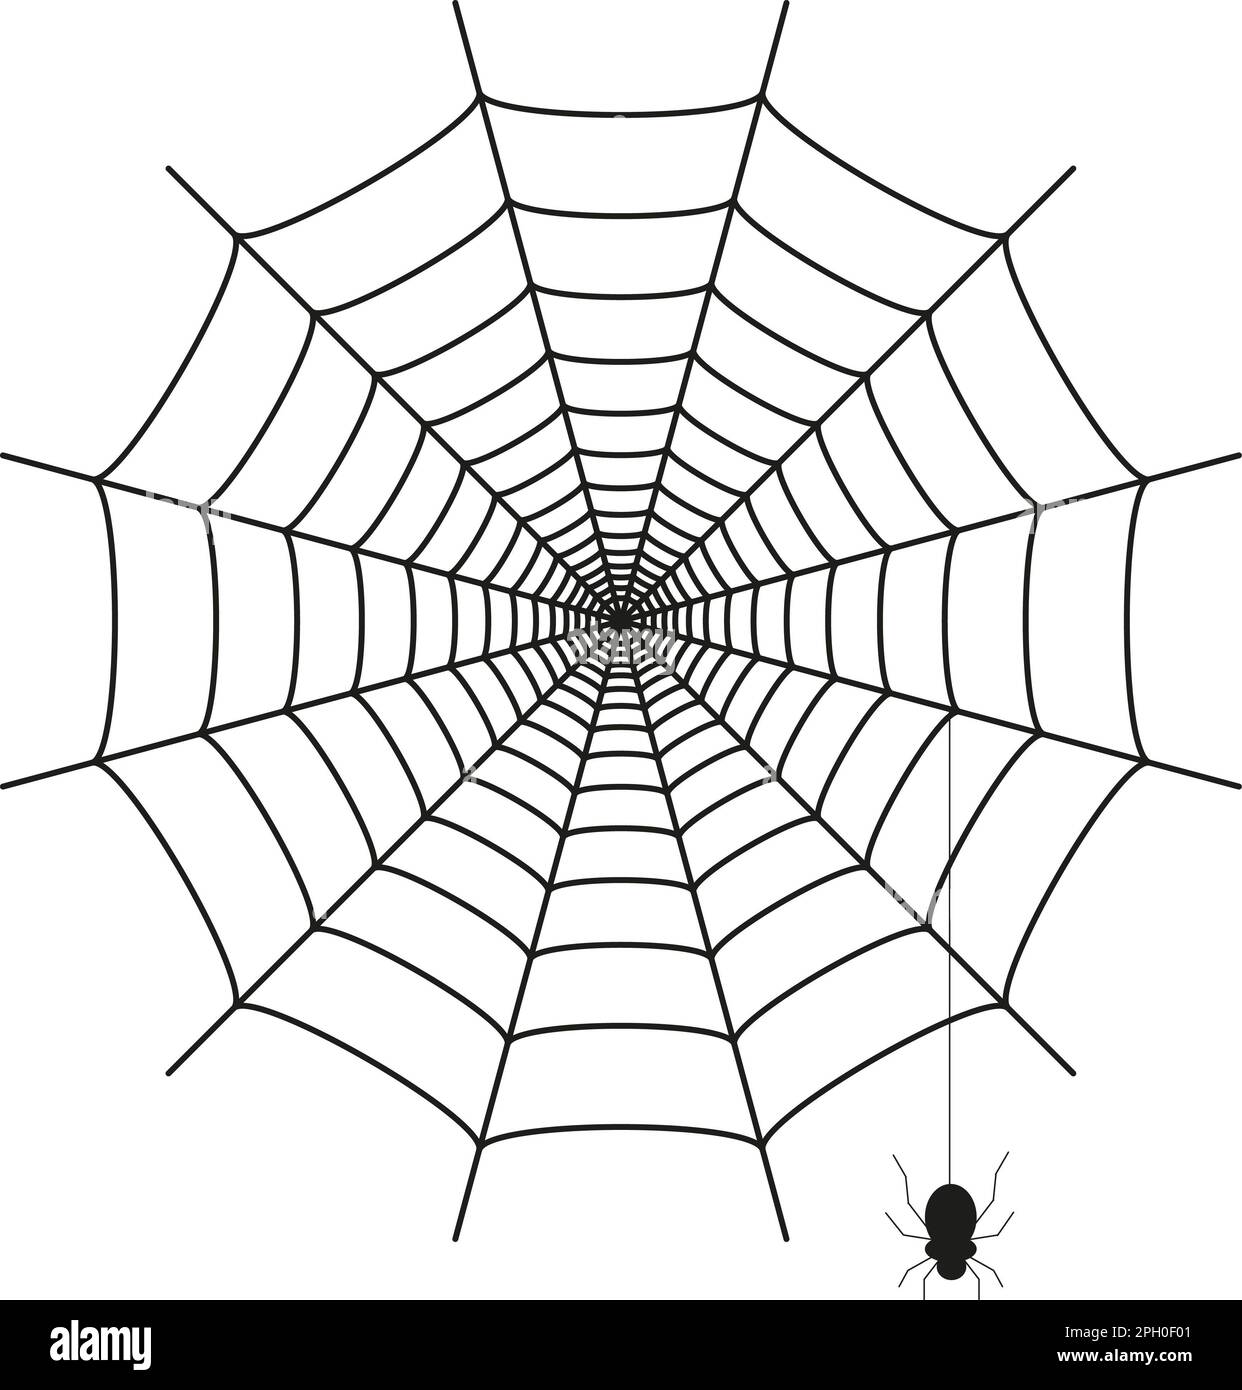 Spider web isolated on white background Stock Photo